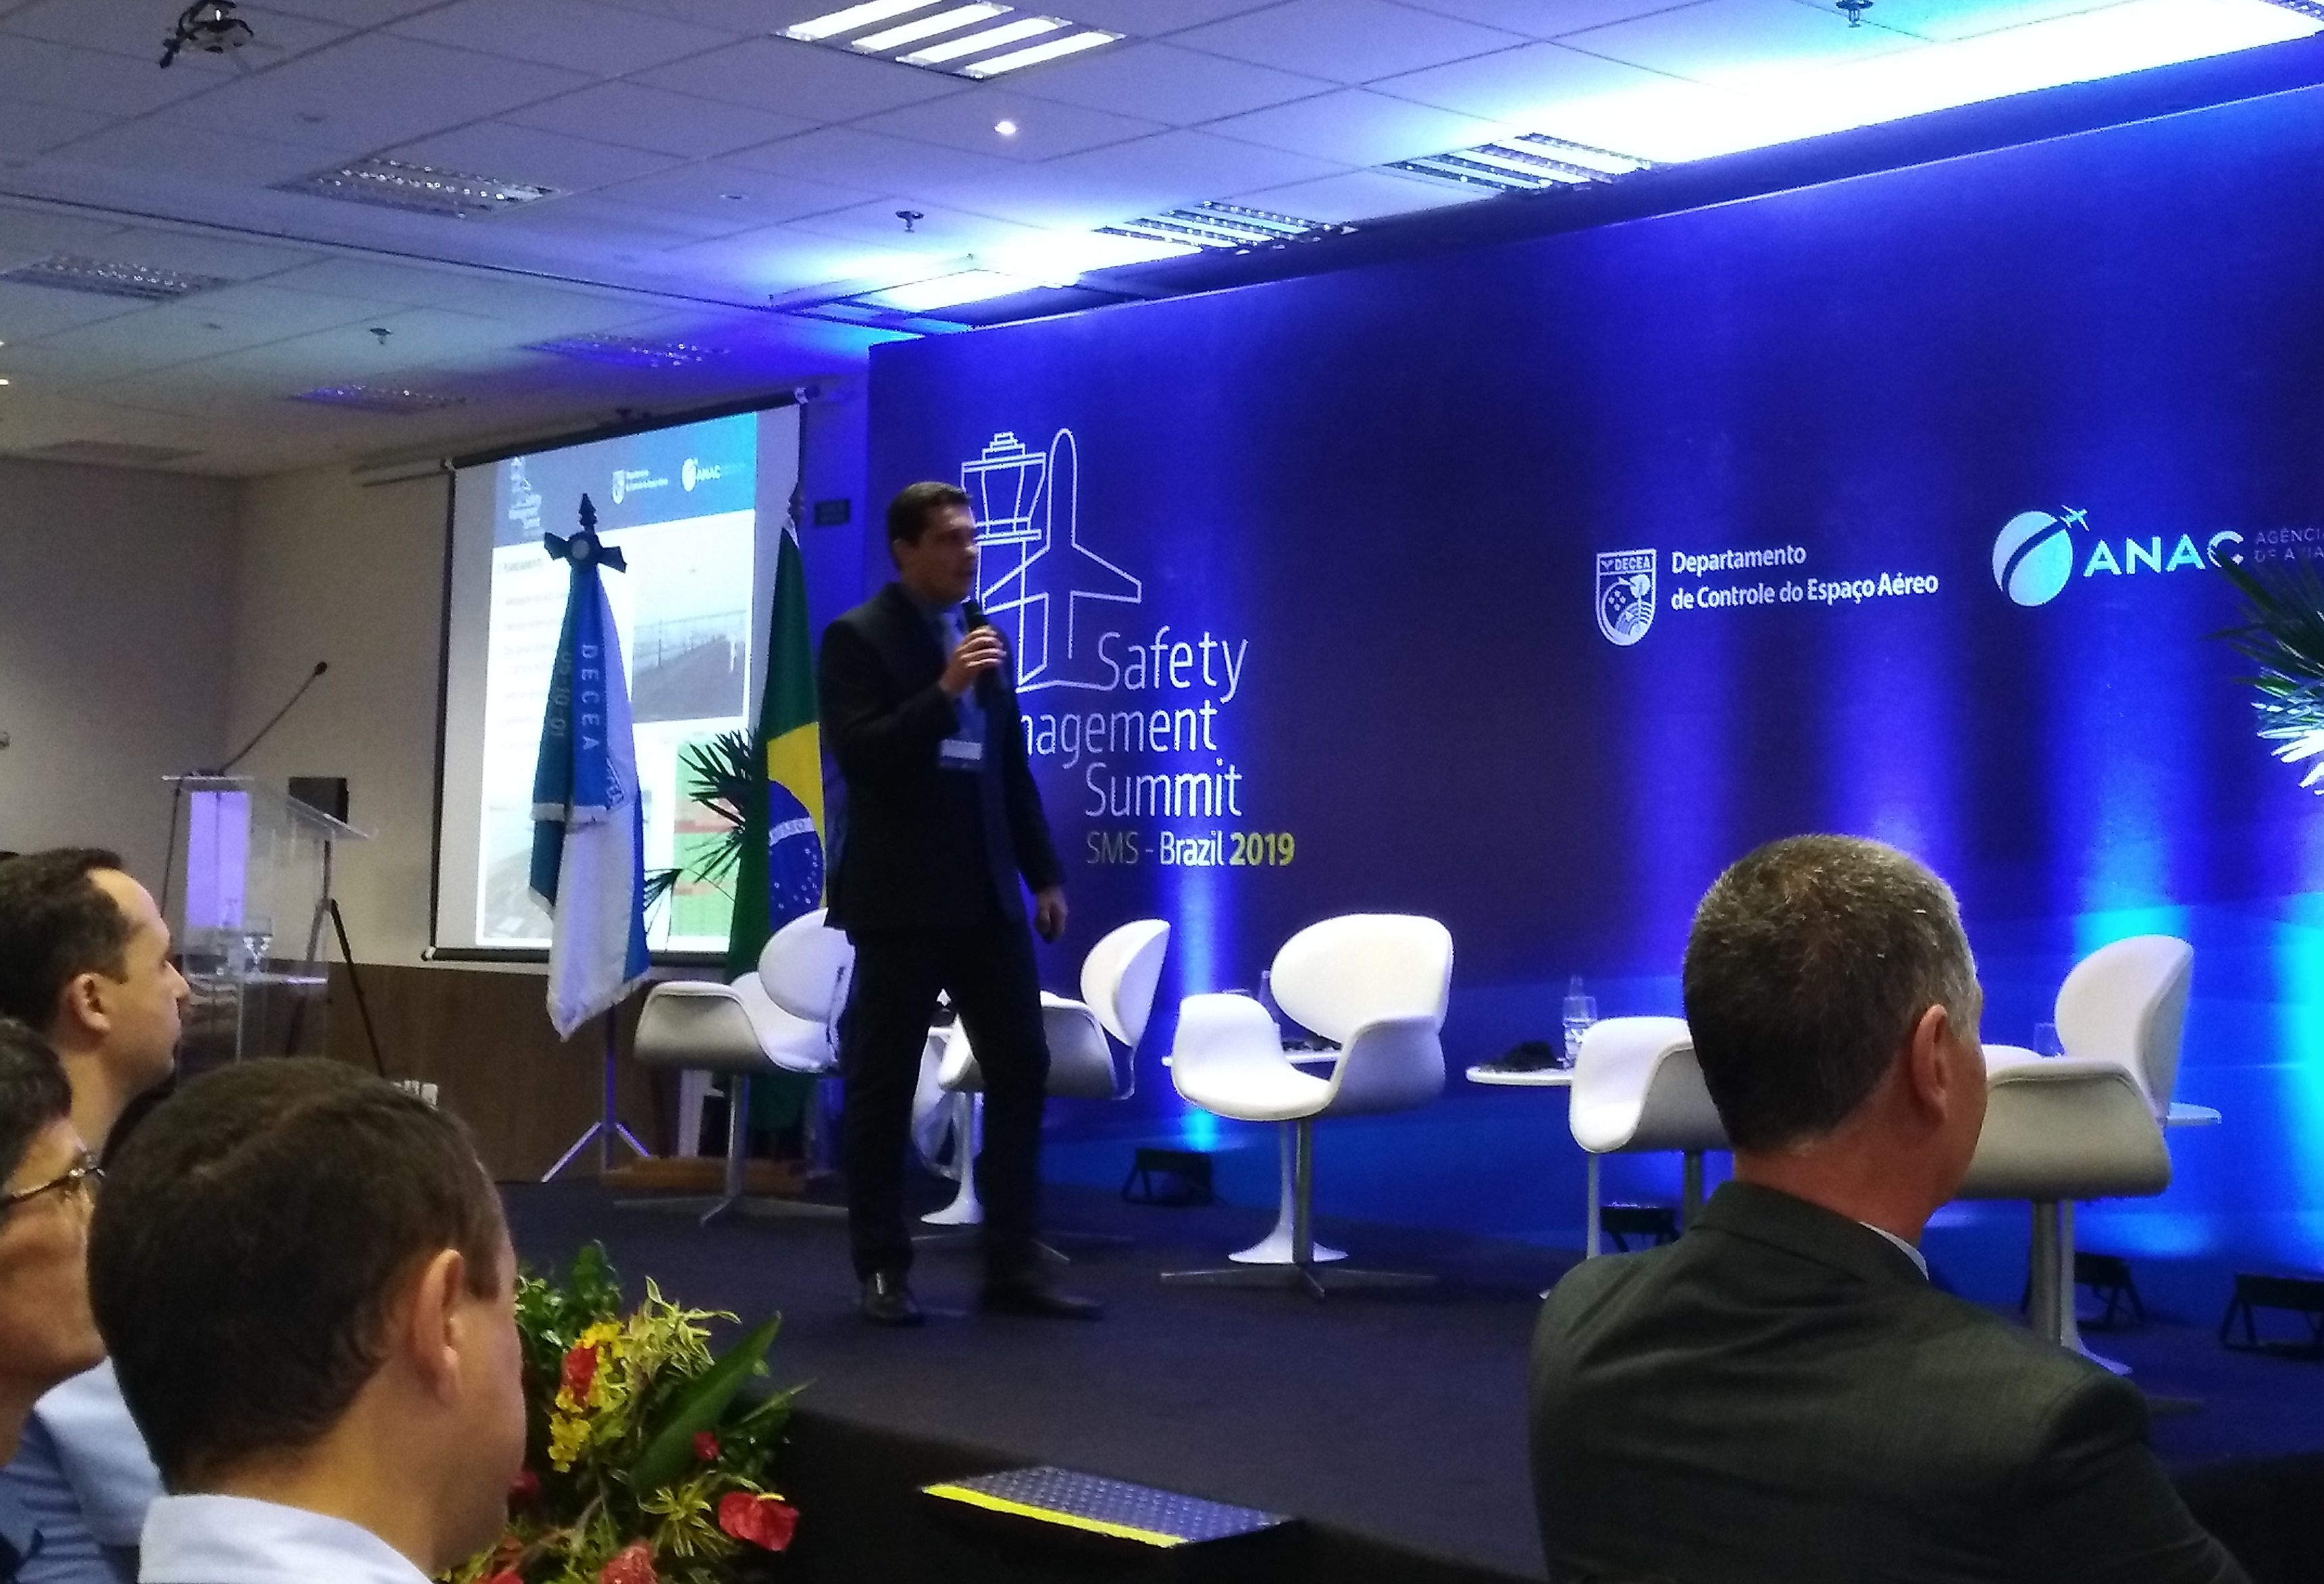 Exposición durante el Safety Management Summit – SMS Brazil 2019